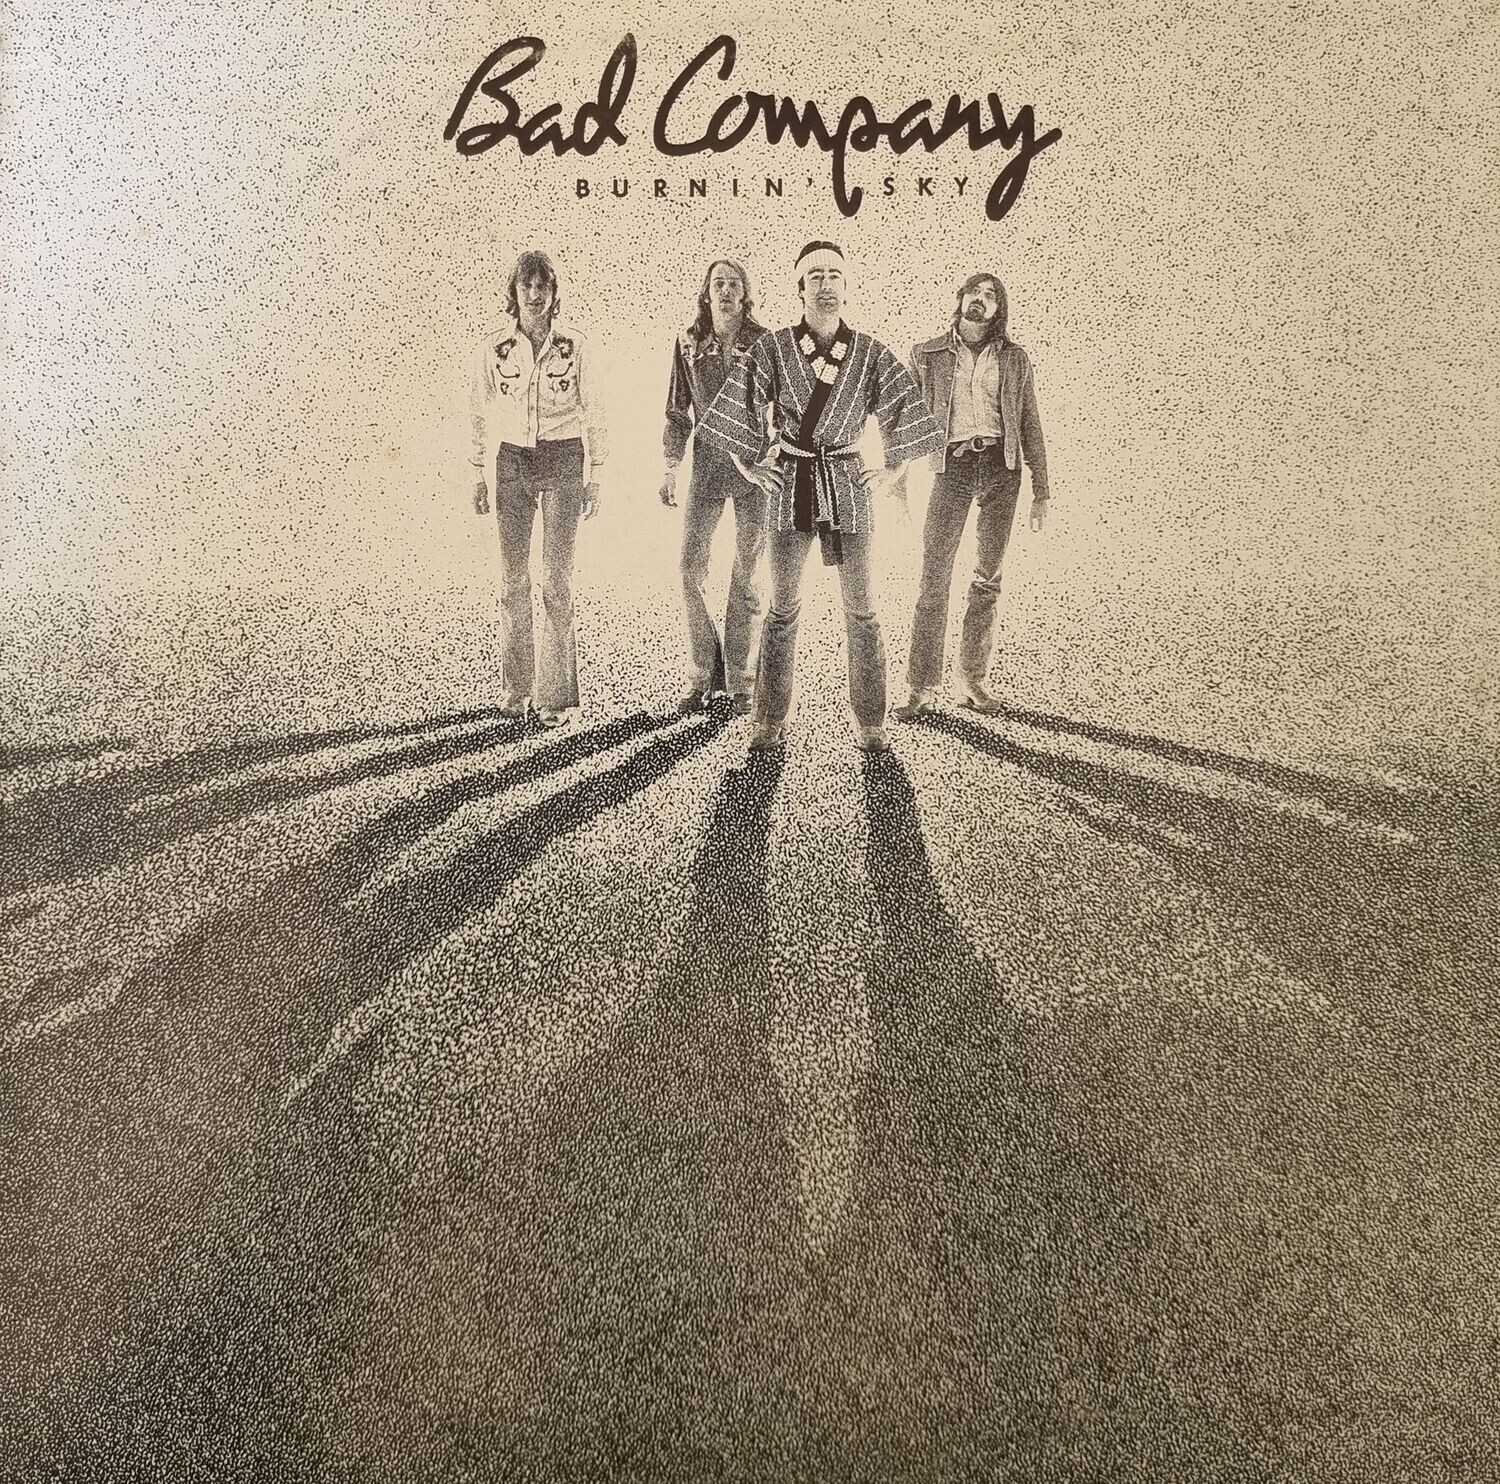 Bad Company – Burnin' Sky (1977) Gatefold Sleeve